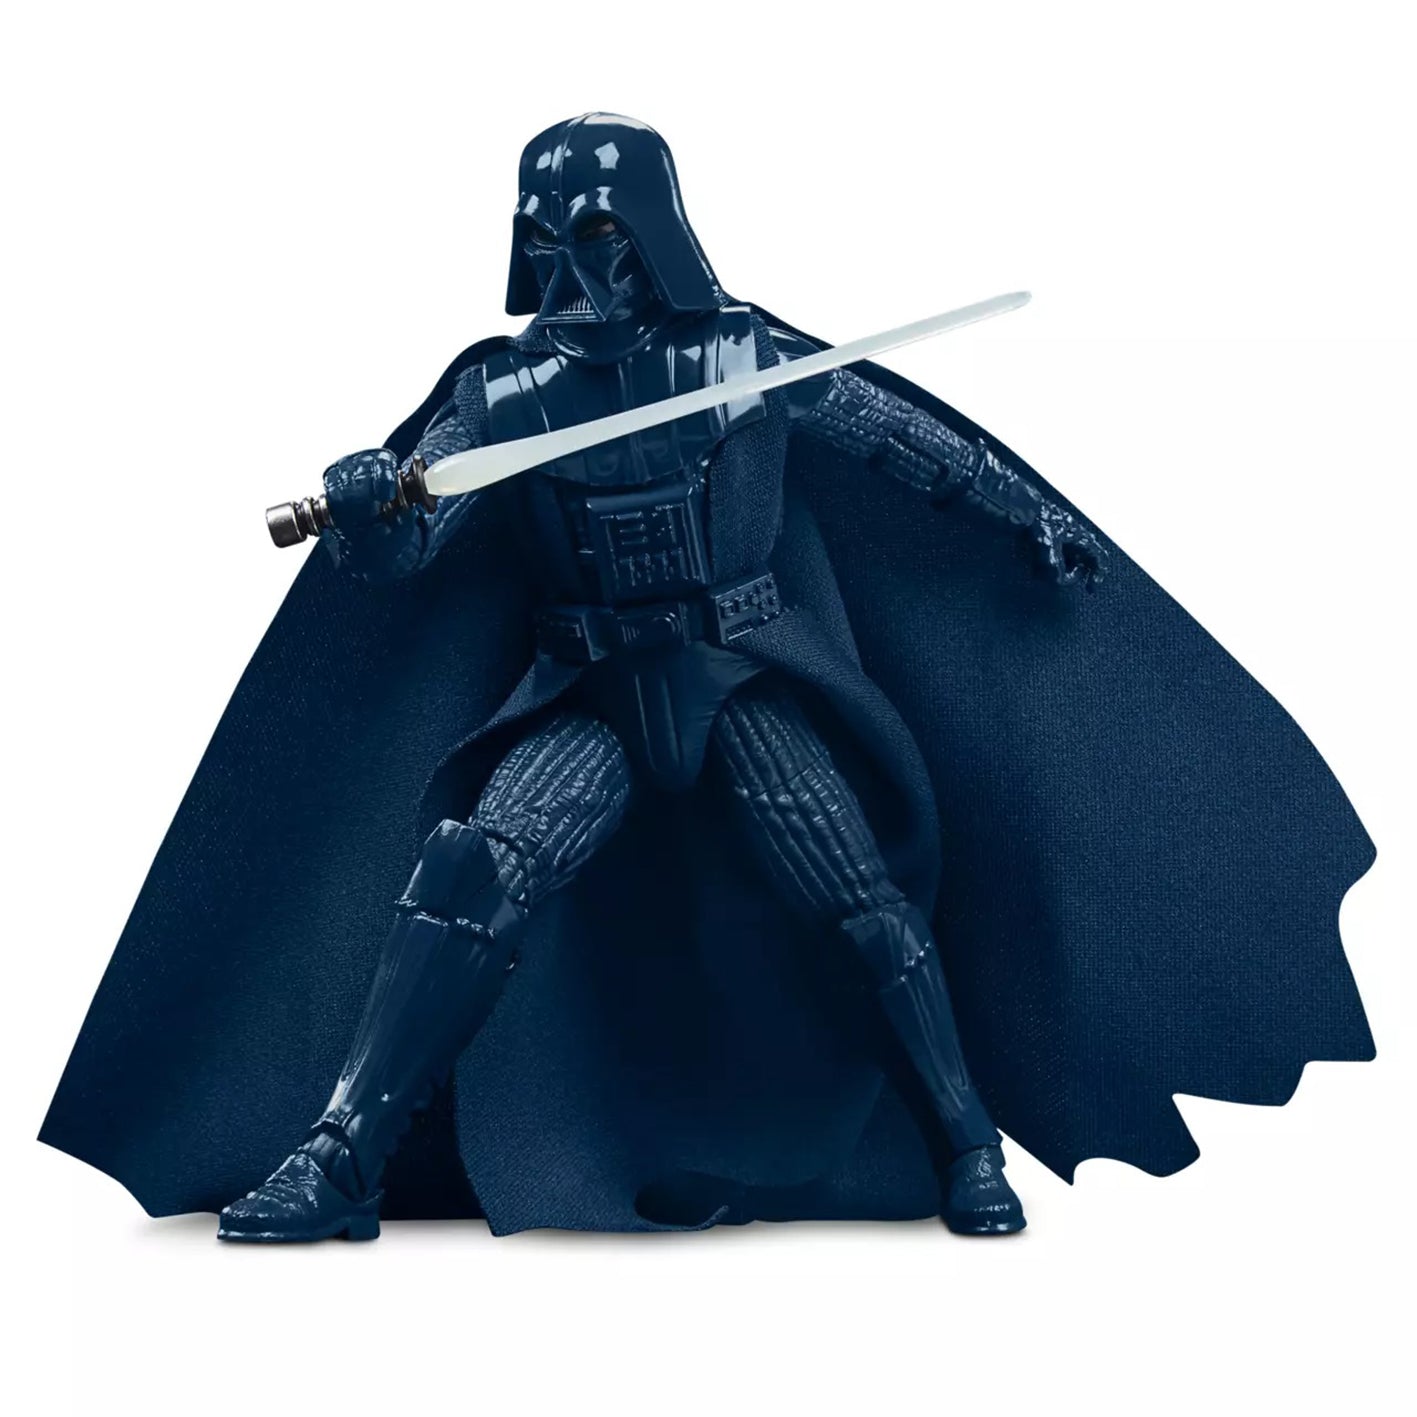 Obi-Wan Kenobi & Darth Vader (Concept Art Edition) Disney Shop Exclusive Star Wars: The Black Series